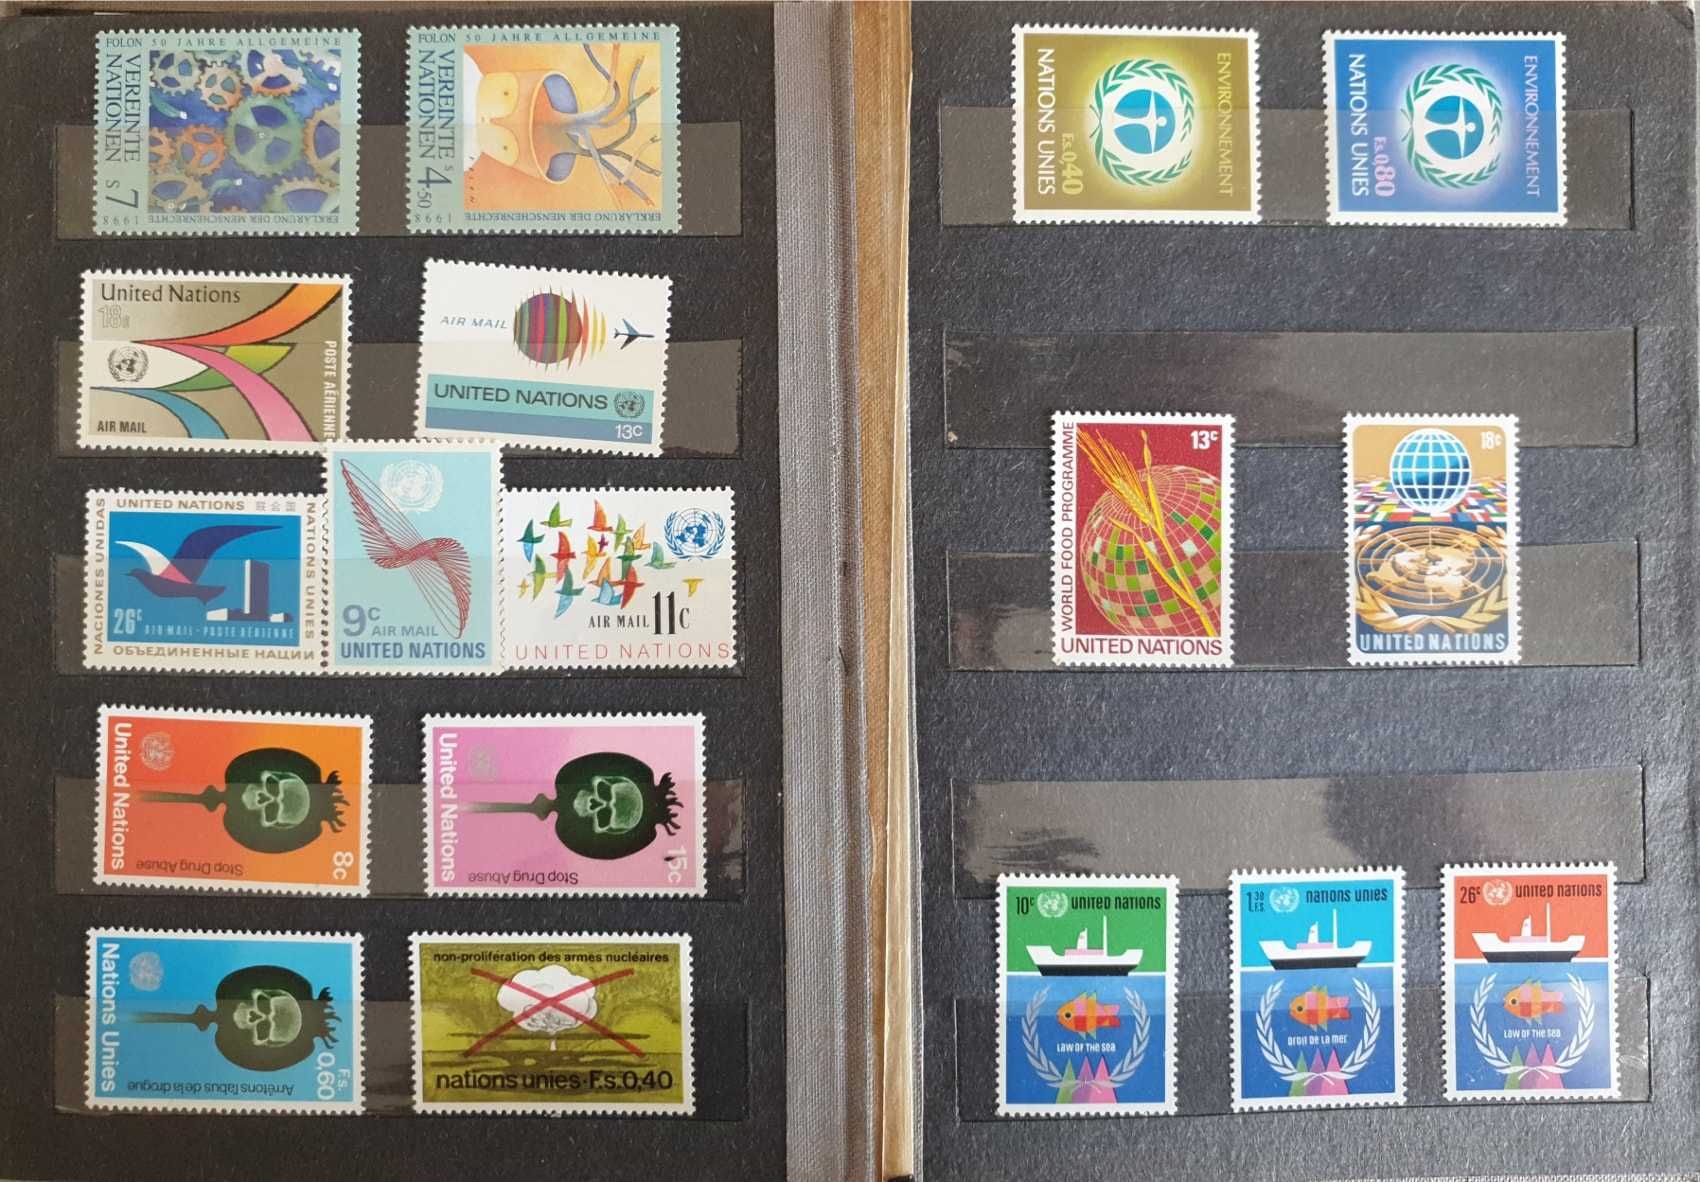 Colectie timbre cu tematica "United Nations/UNESCCO"